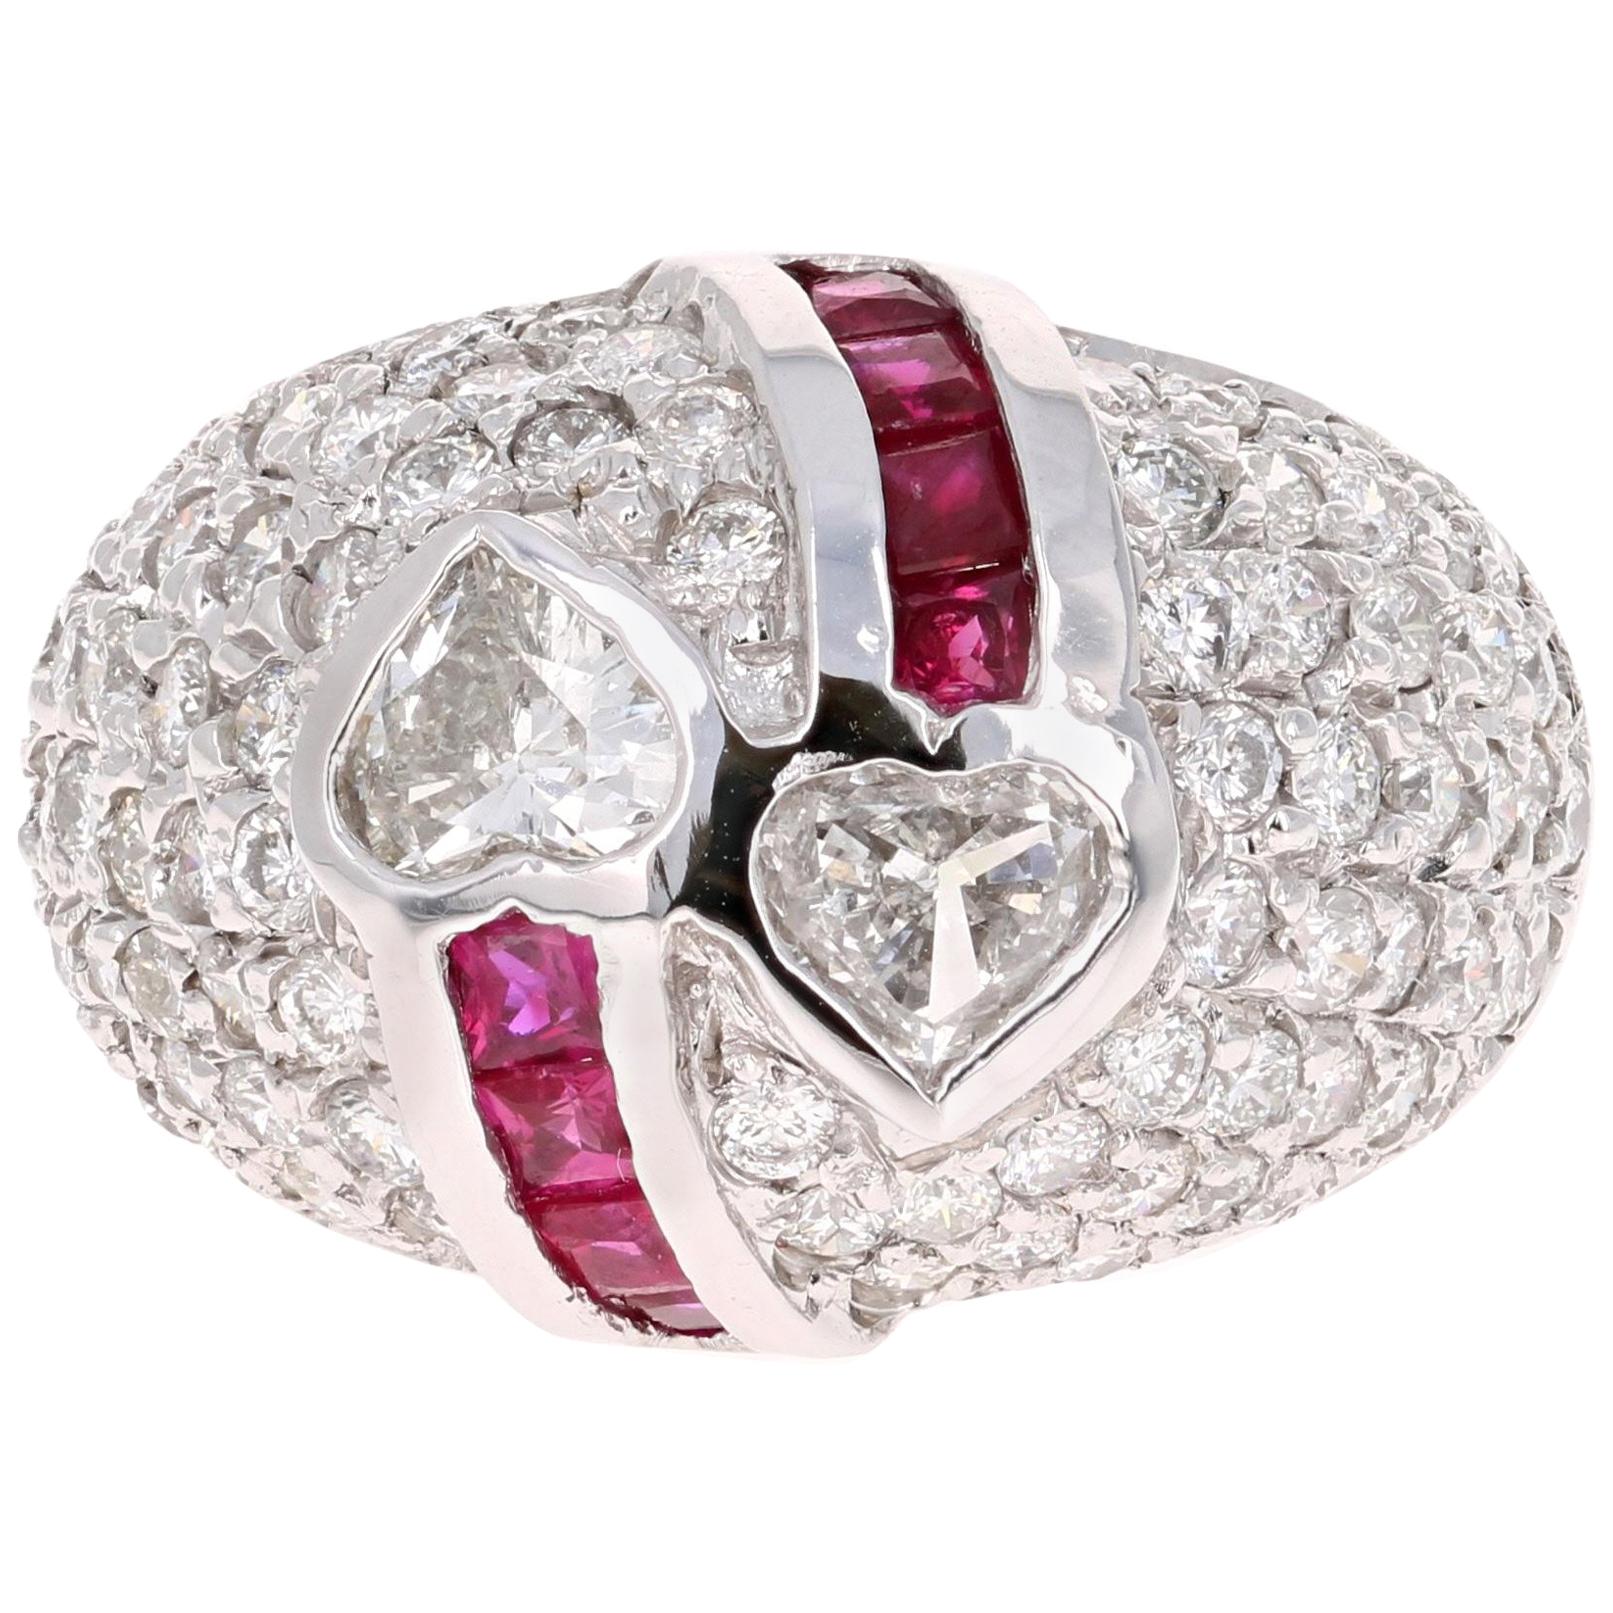 3.41 Carat Ruby and Heart Diamond 14 Karat White Gold Ring